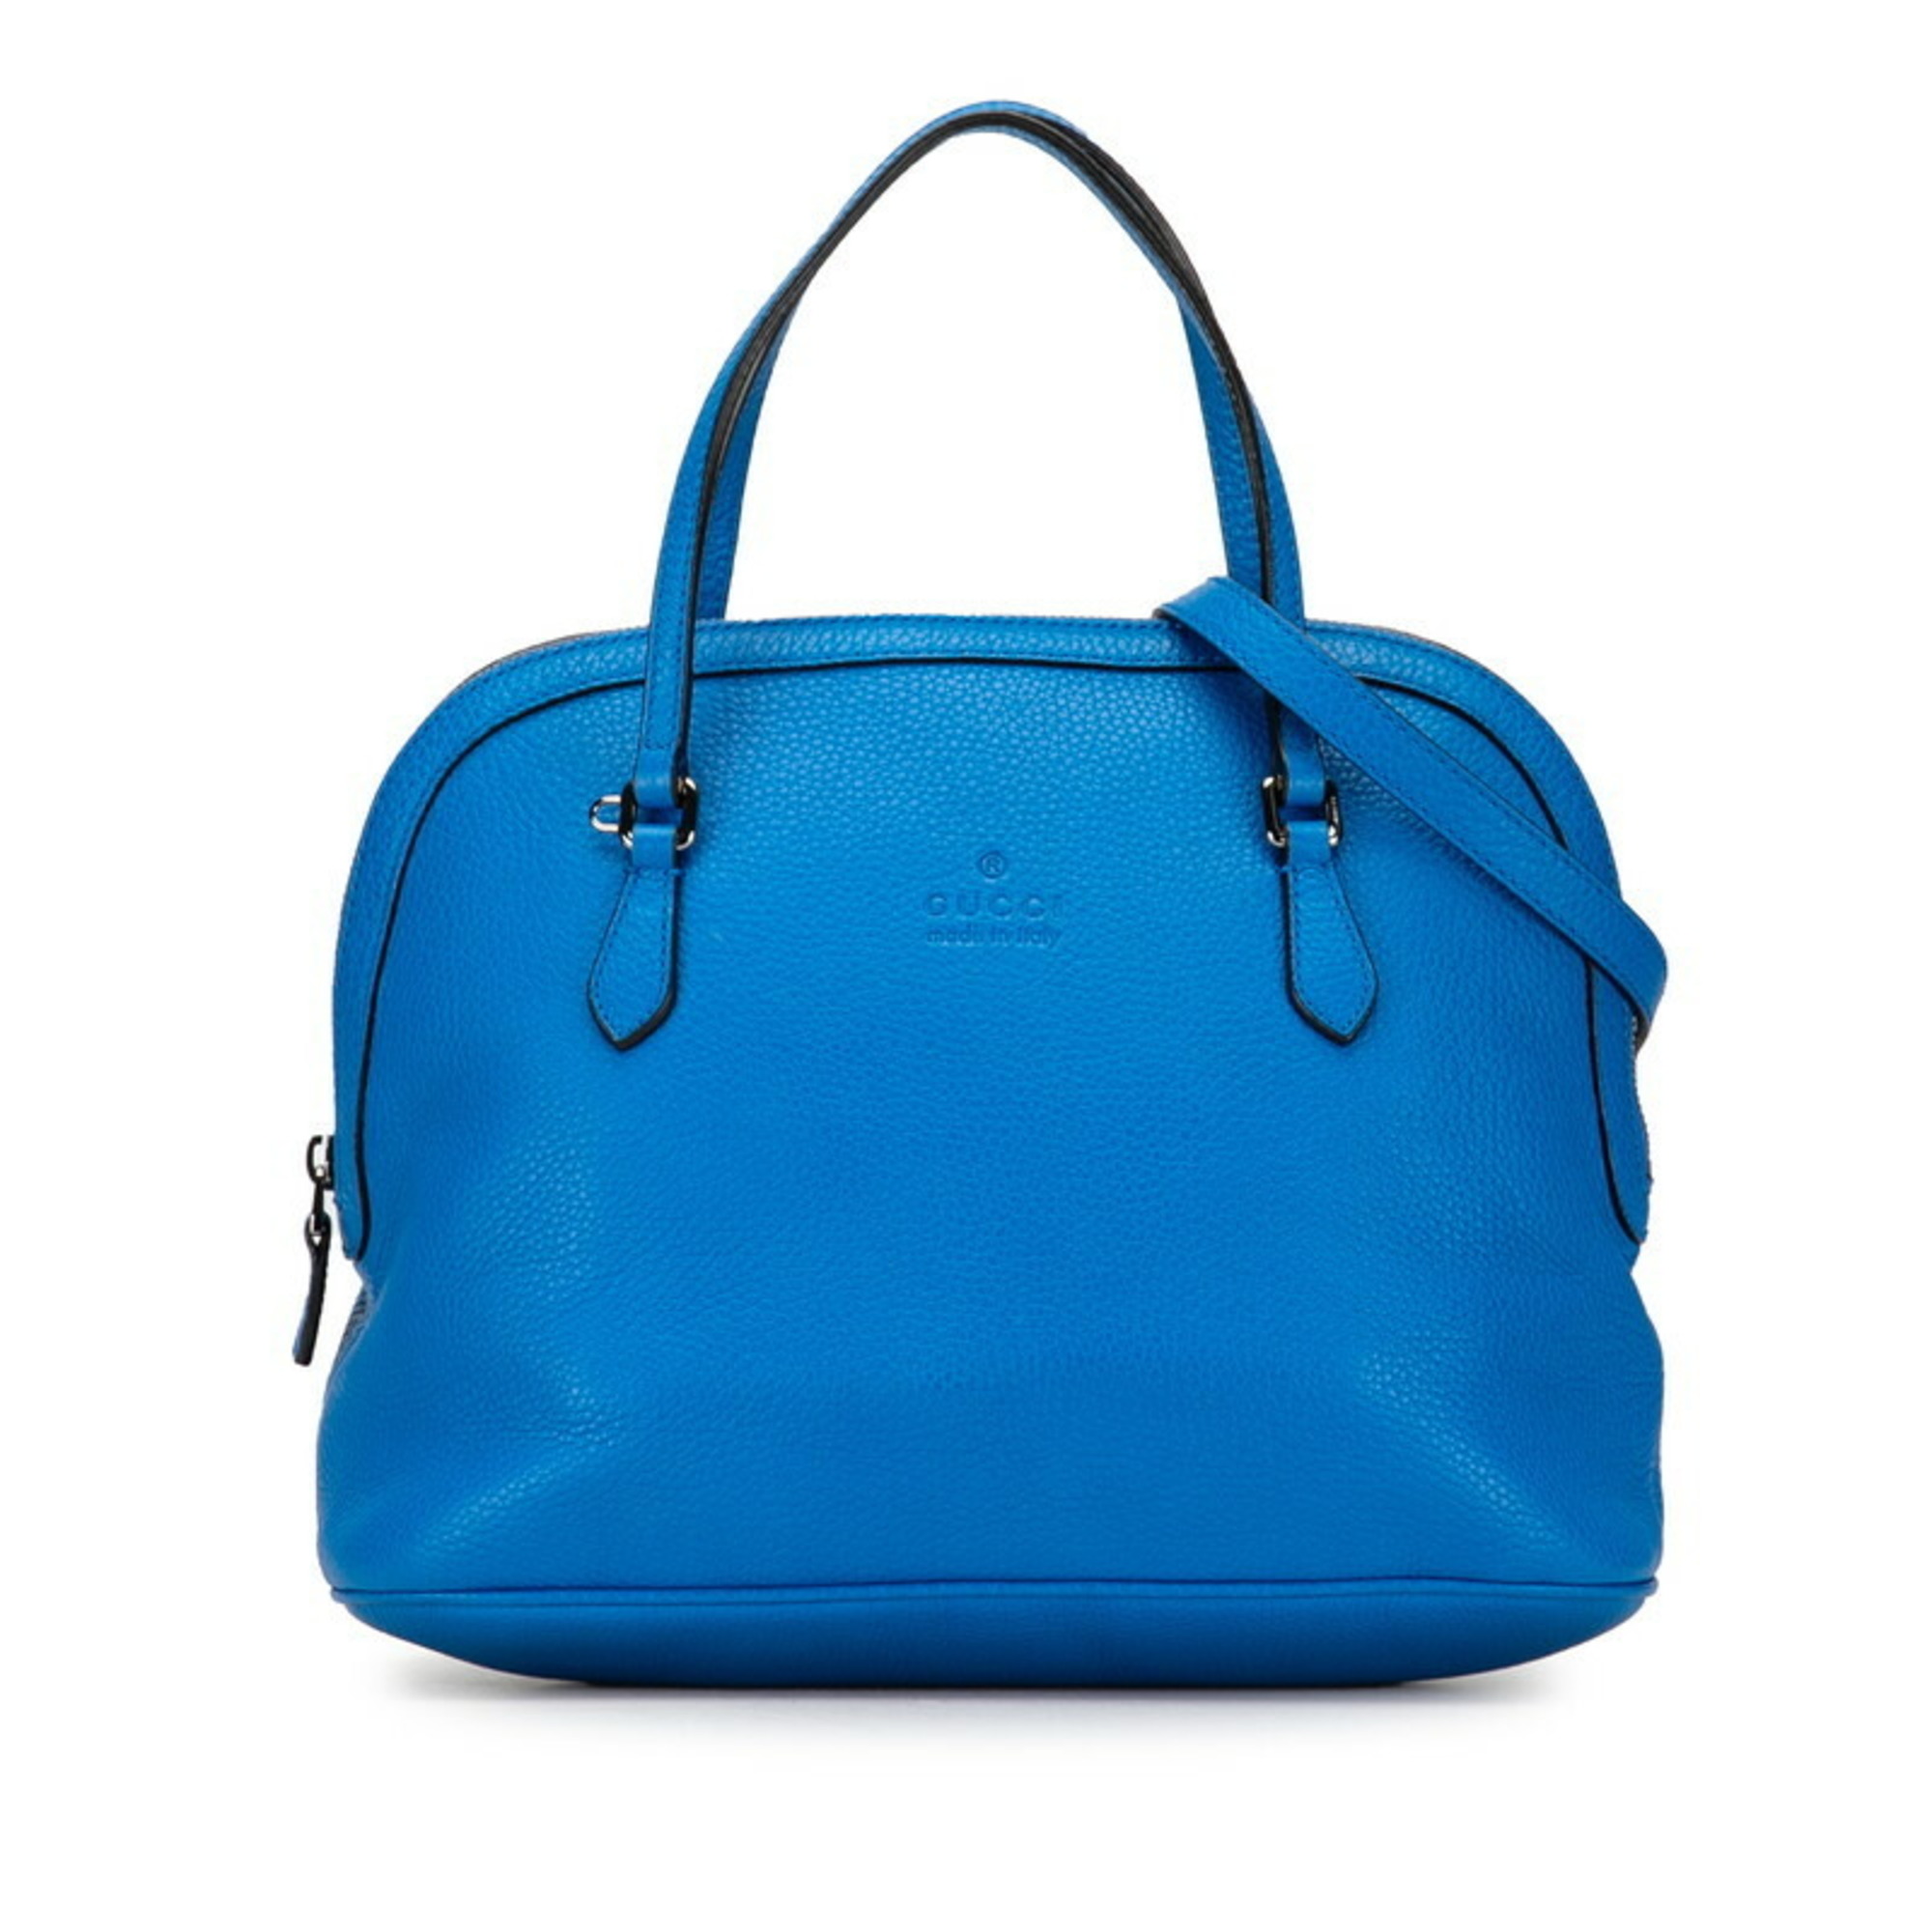 Gucci handbag shoulder bag blue leather ladies GUCCI